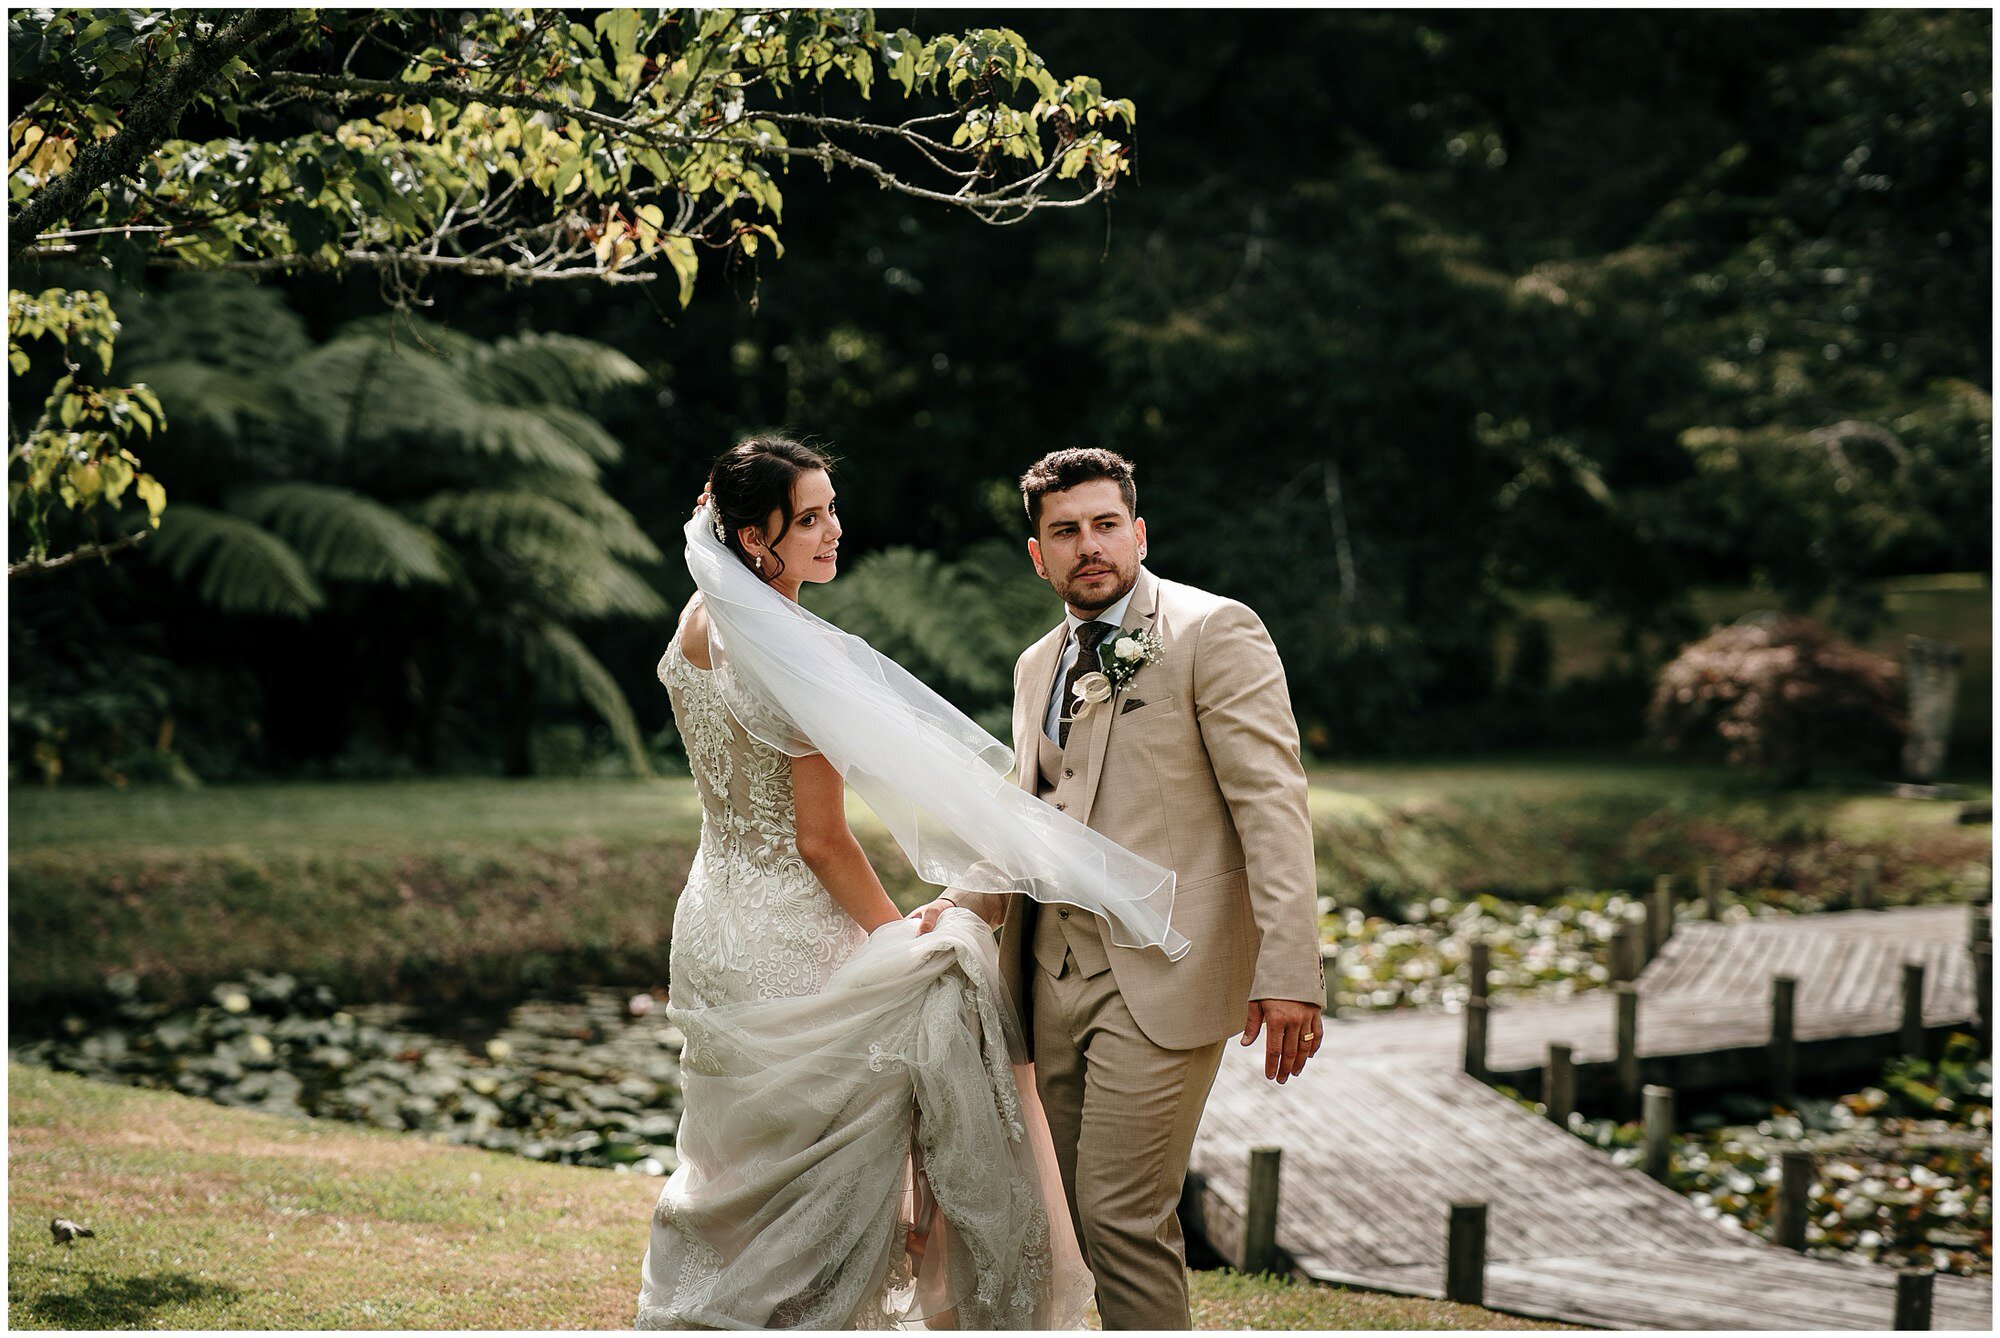 Auckland Wedding Photographer | Auckland Wedding Videographer | Waterlily Garden Wedding | Auckland Photographer | Waihi Wedding Venue | Cambridge Venue